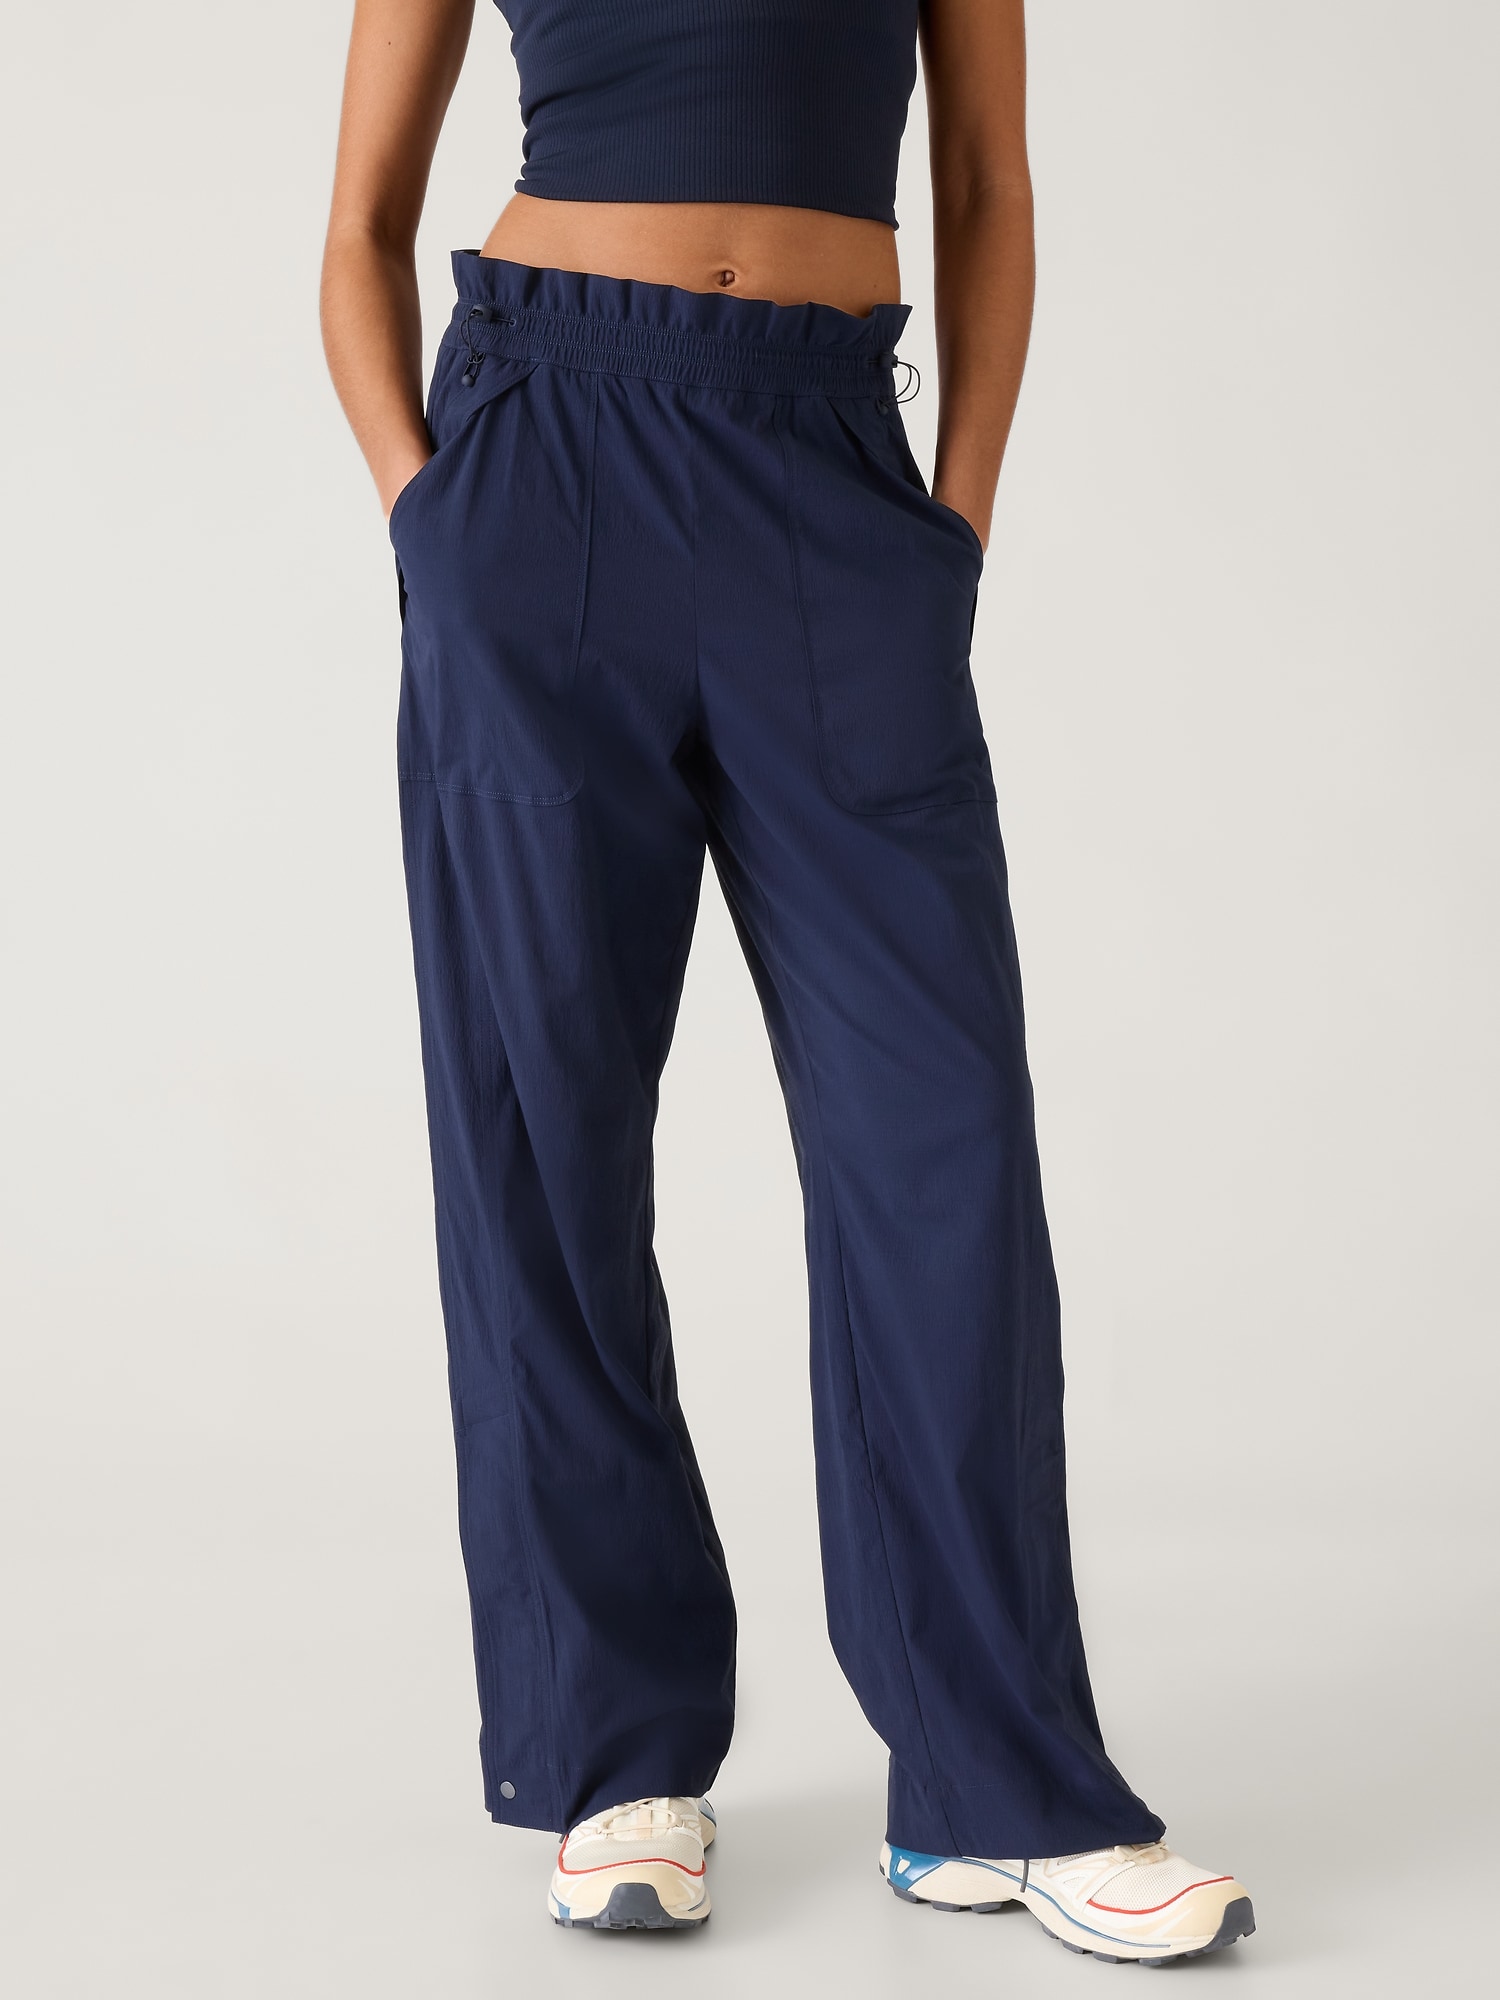 lululemon athletica, Pants & Jumpsuits, Lululemon Dance Studio Pants Navy  Size 4